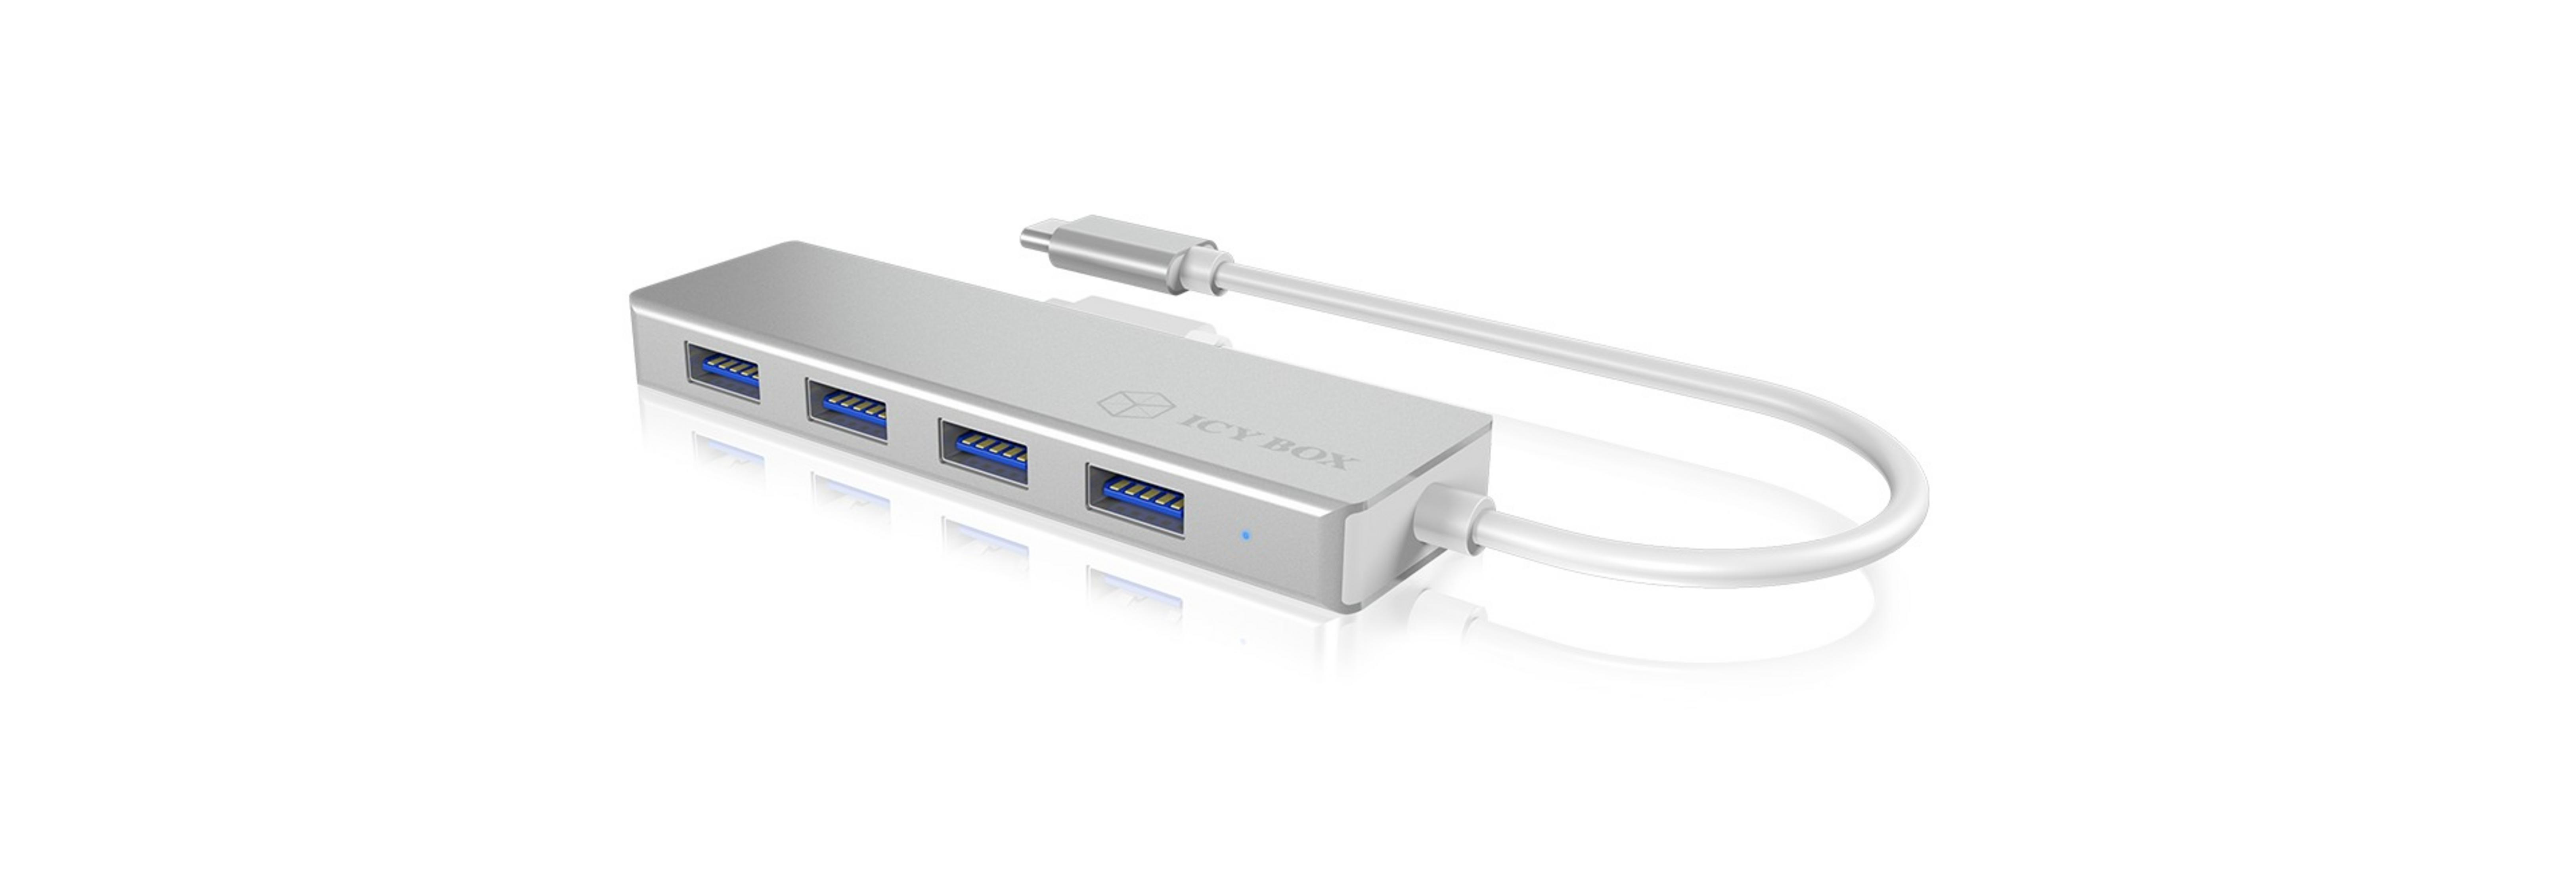 Hub, RAIDSONIC USB Silber IB-HUB1425-C3 USB Verteiler,